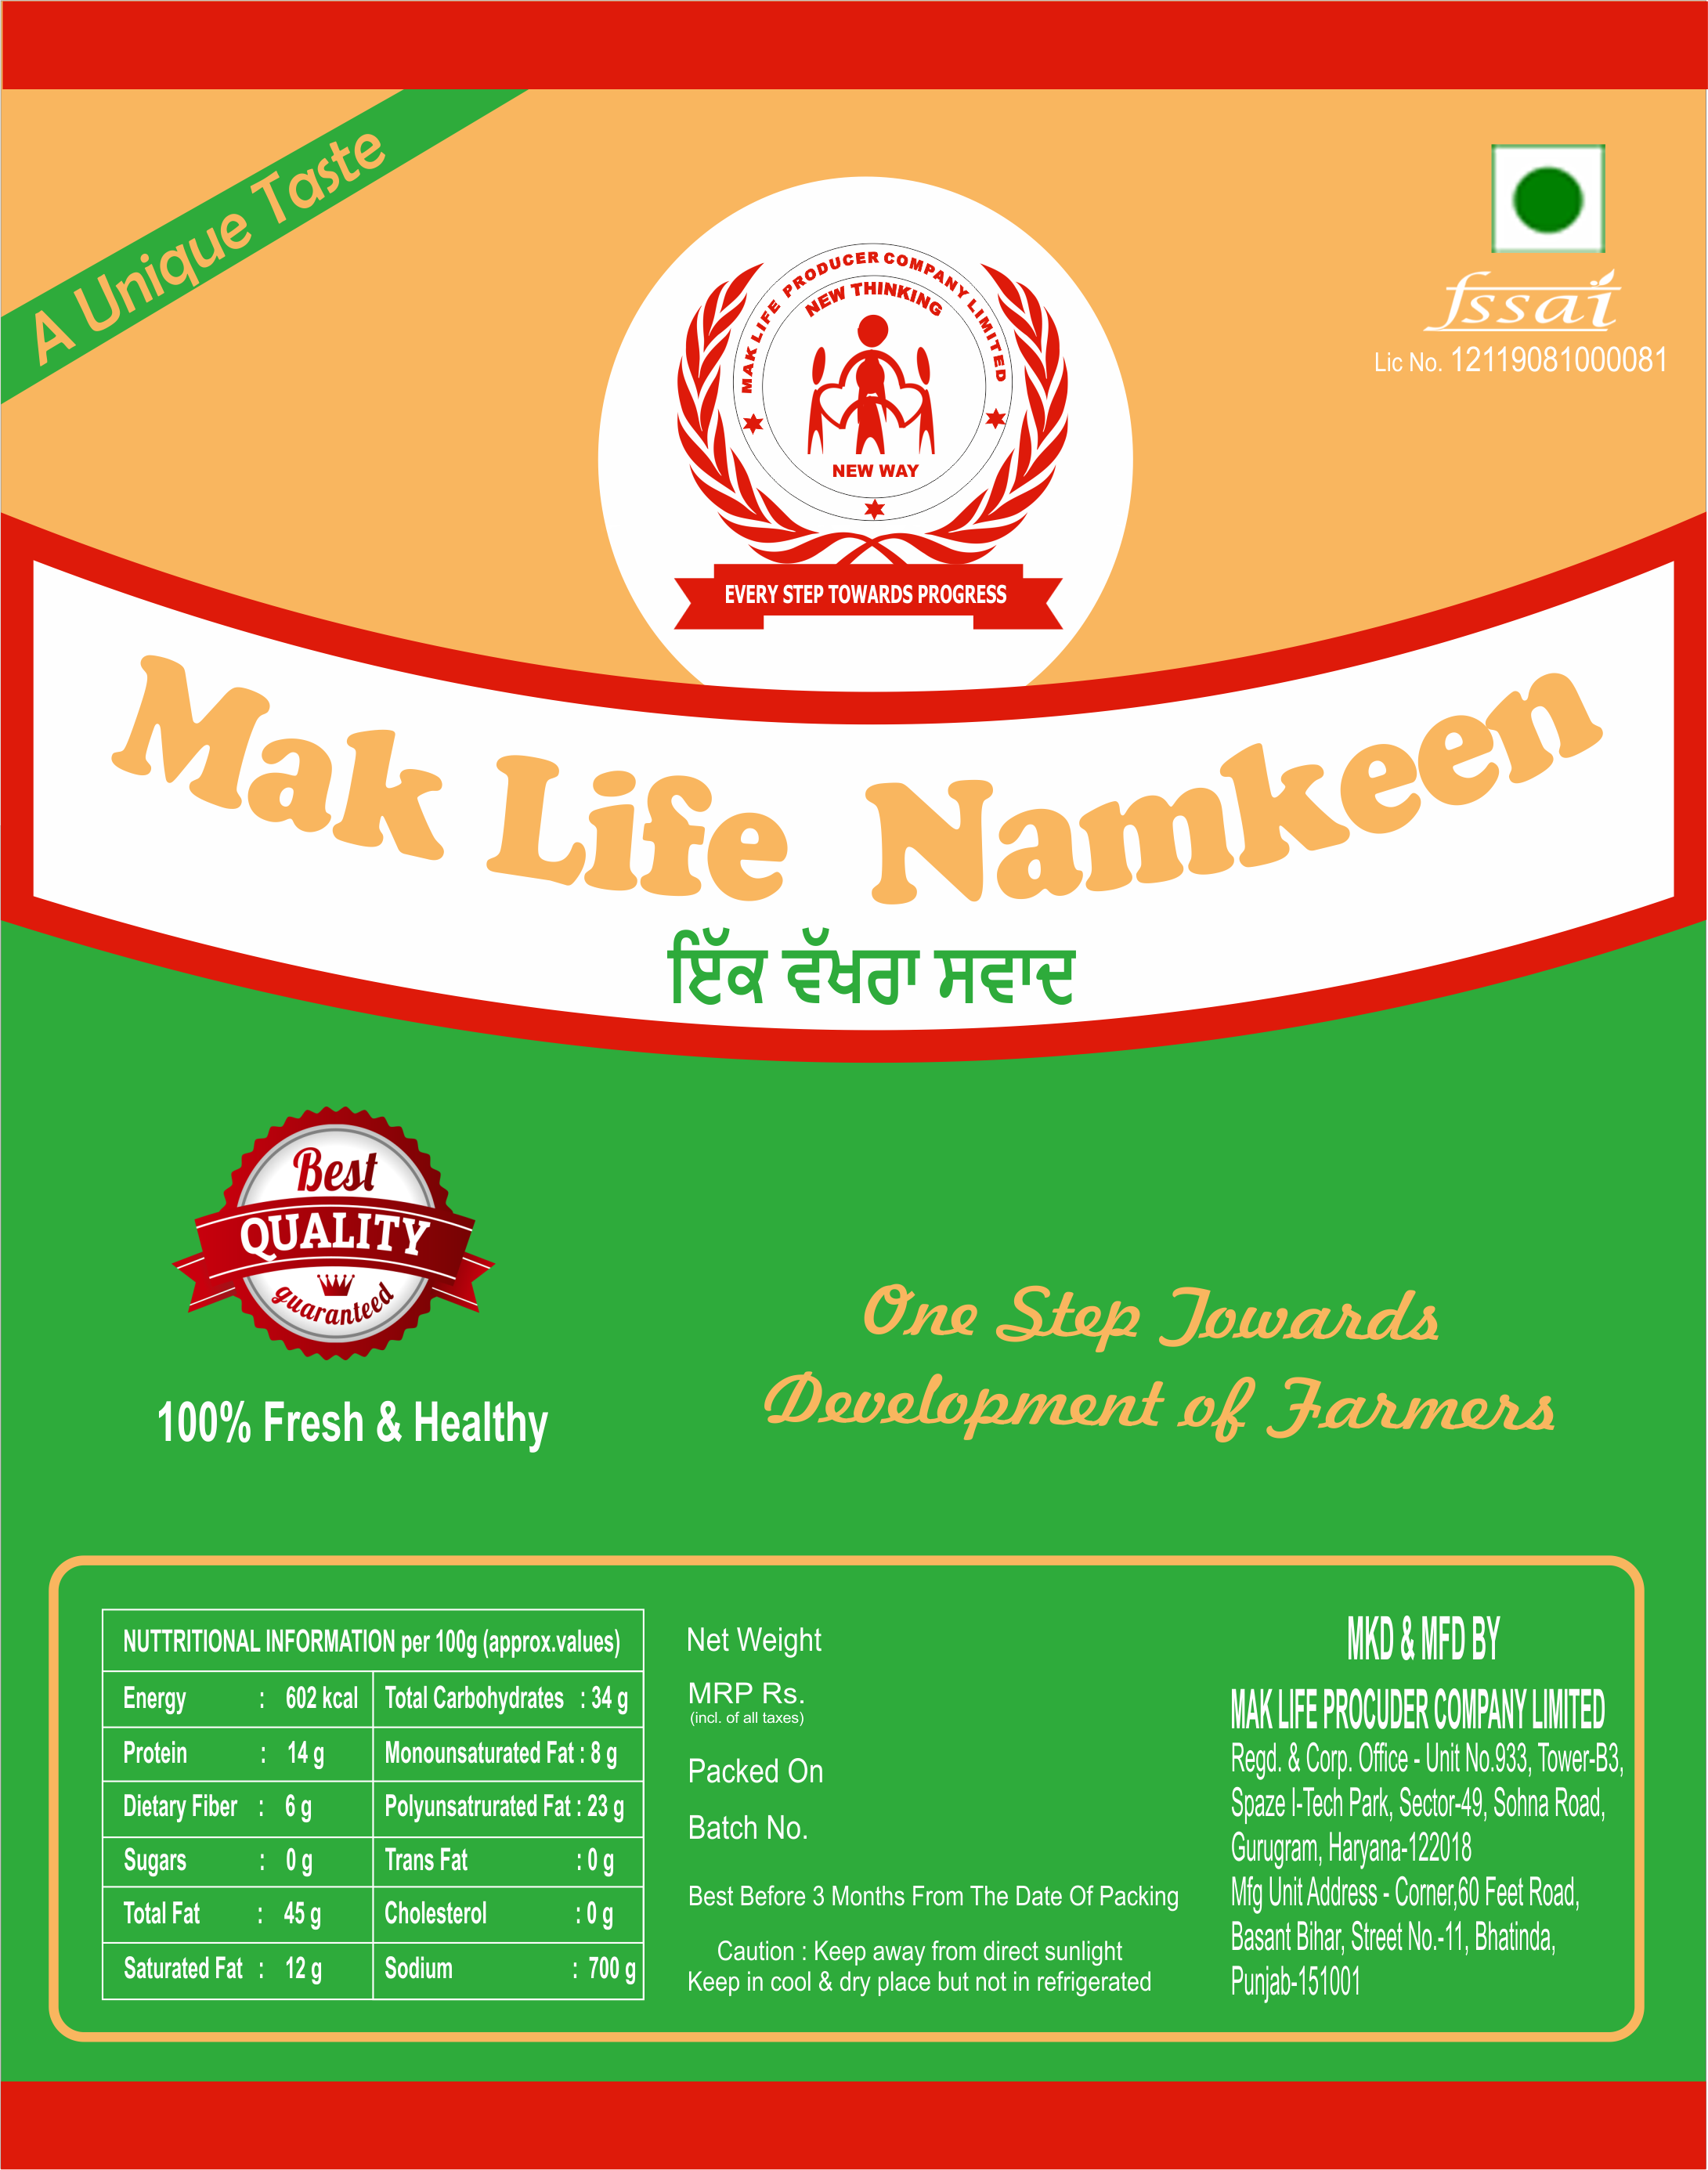 Mak Life Namkeen